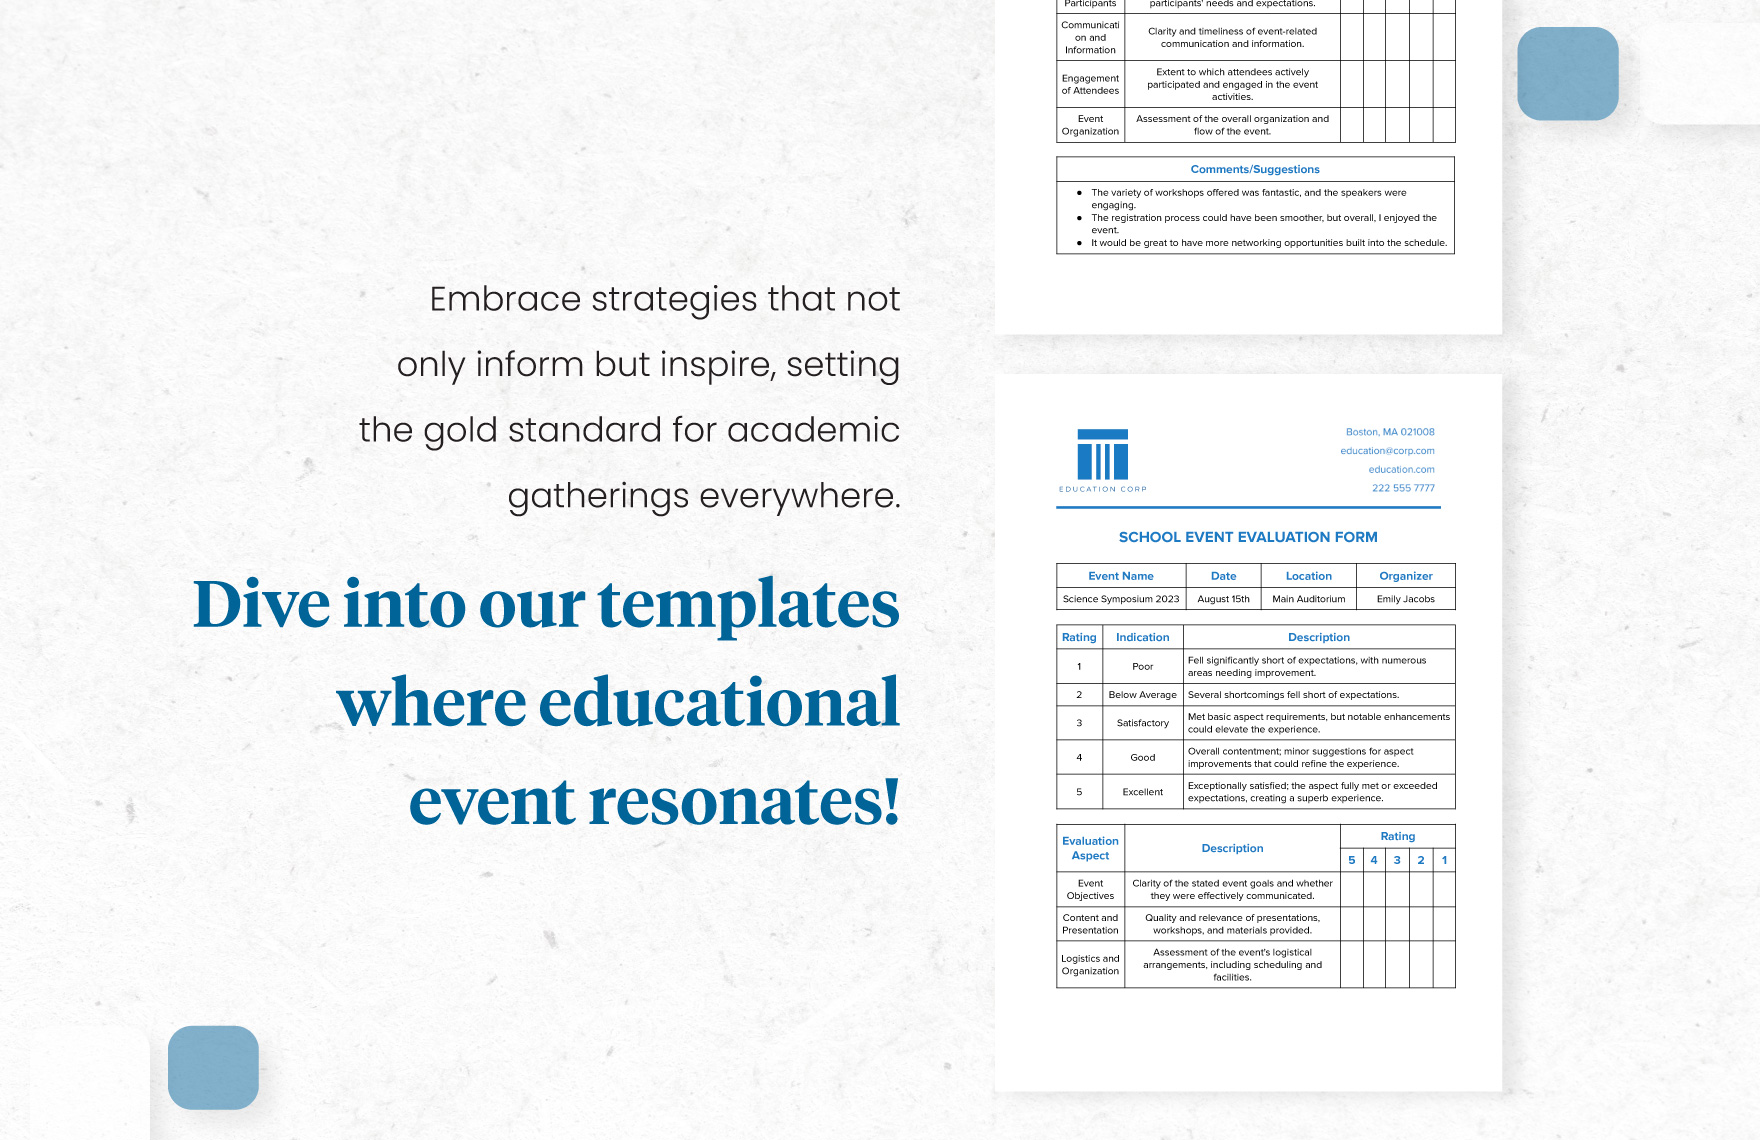 School Event Evaluation Form Template